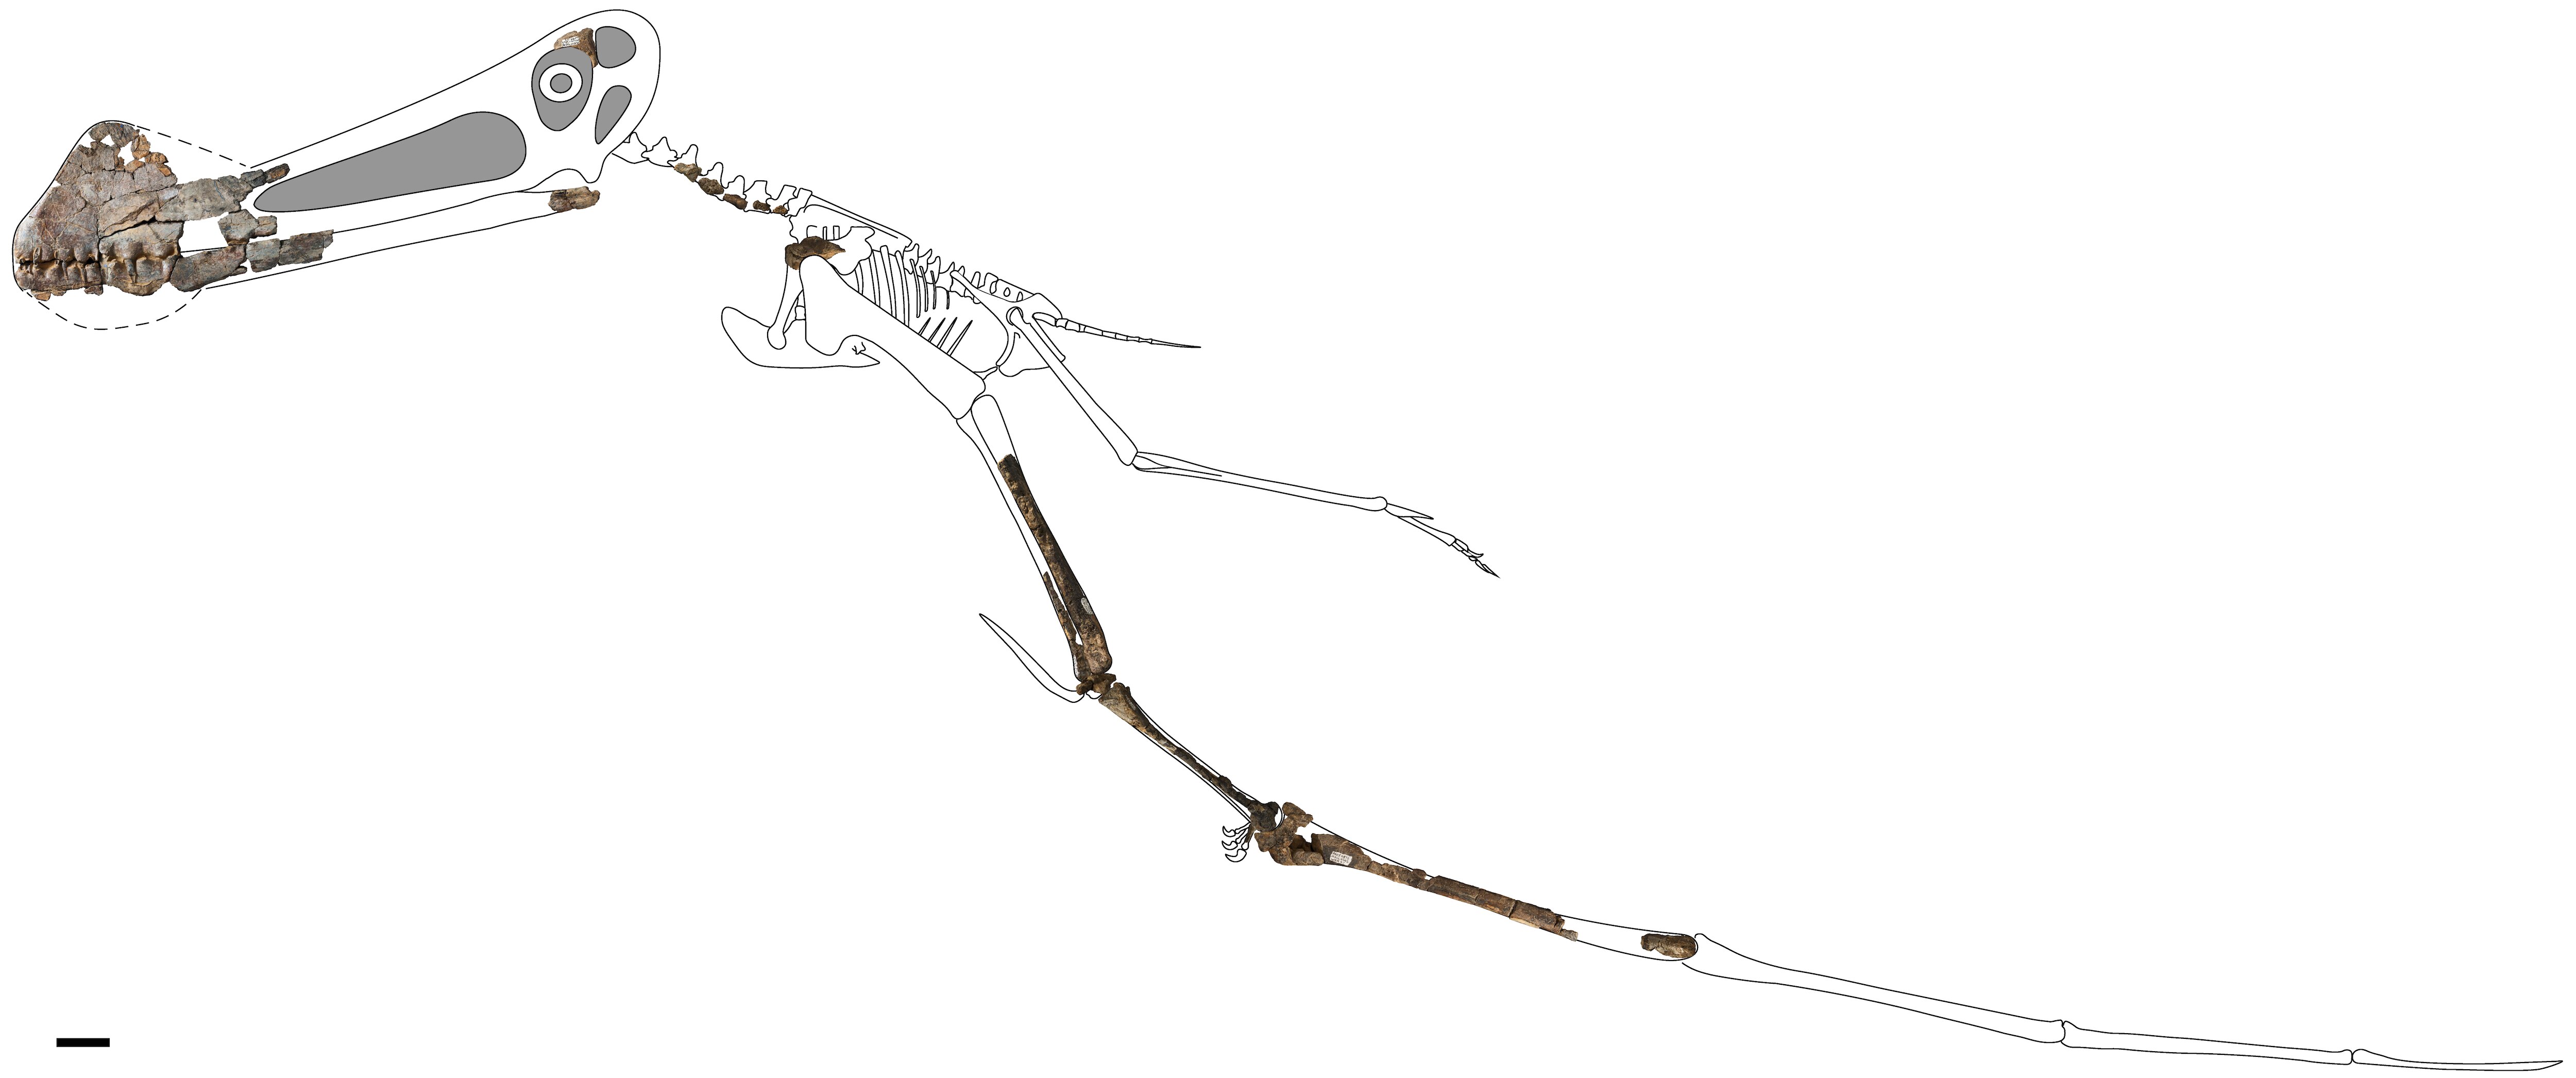 Skeletal reconstruction of a Ferrodraco lentoni